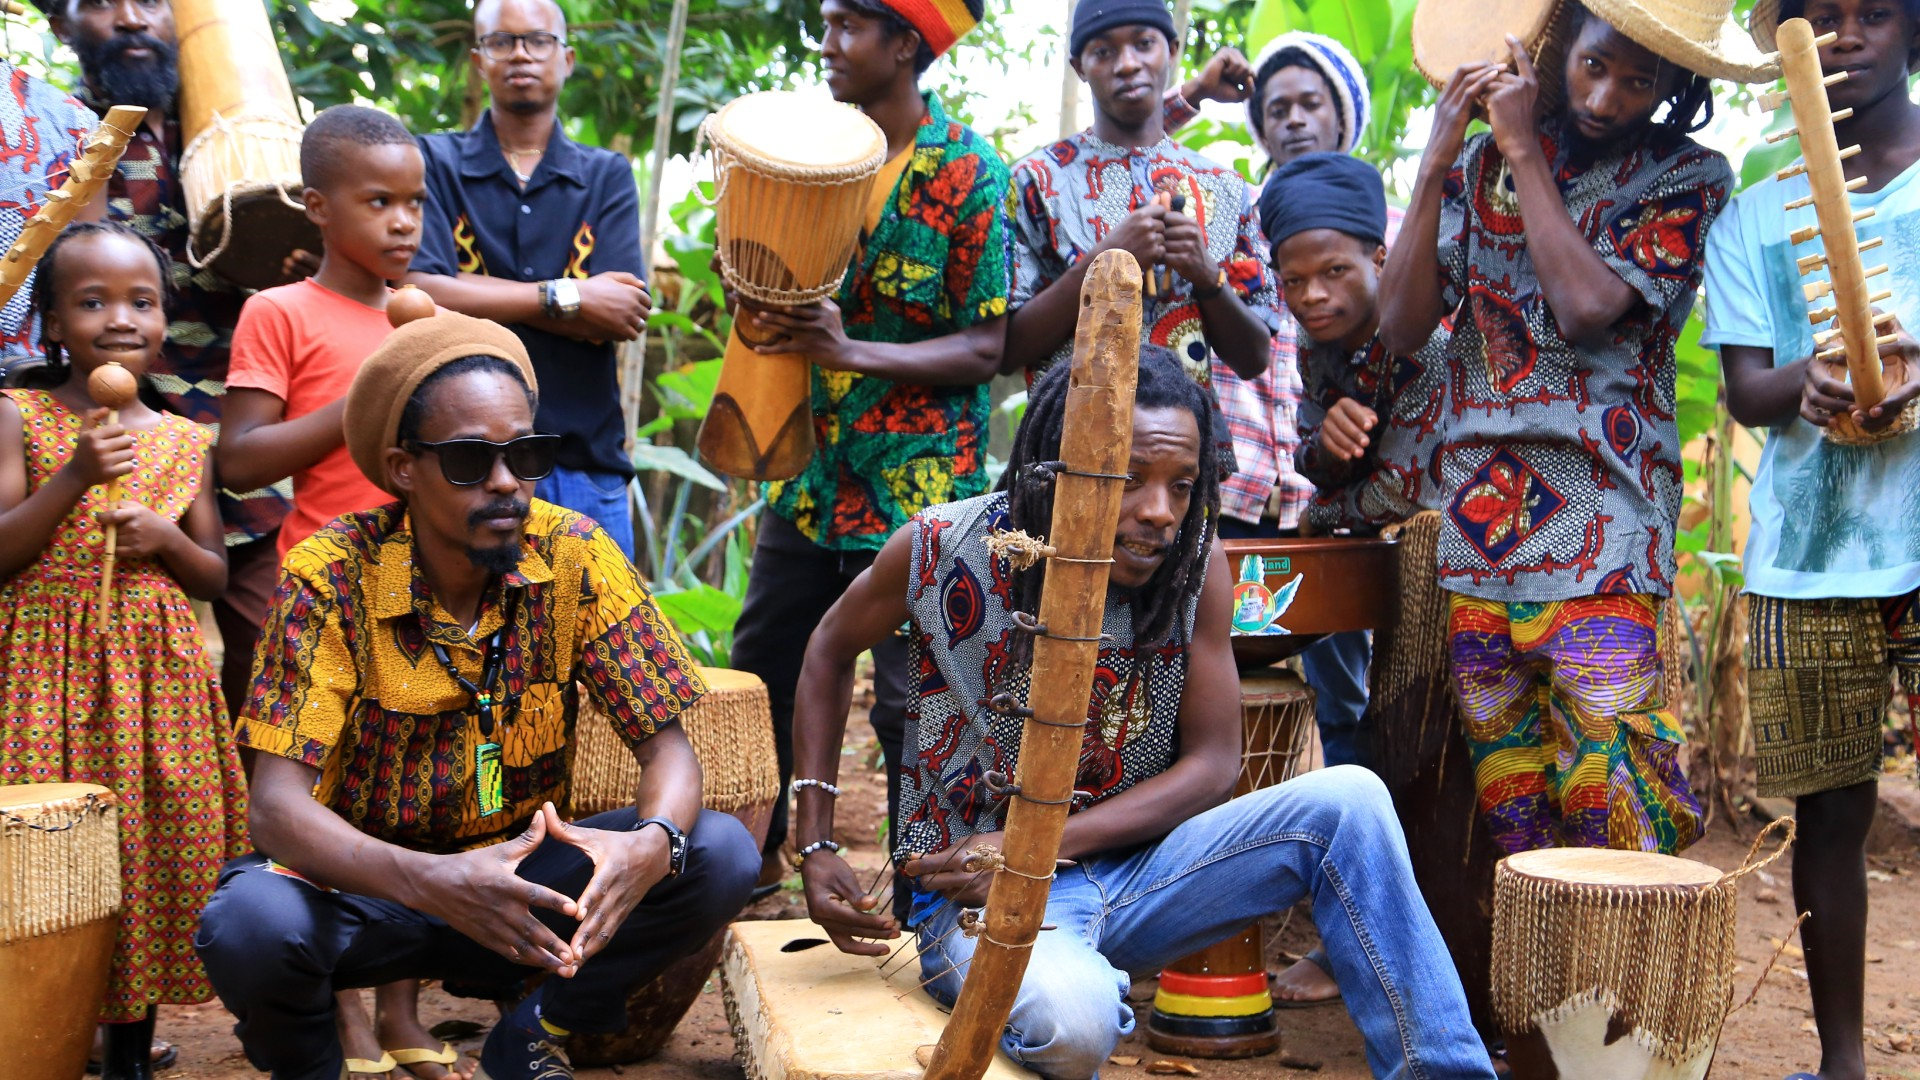 Nilotika Cultural Ensemble | Nyabingi Resurrection